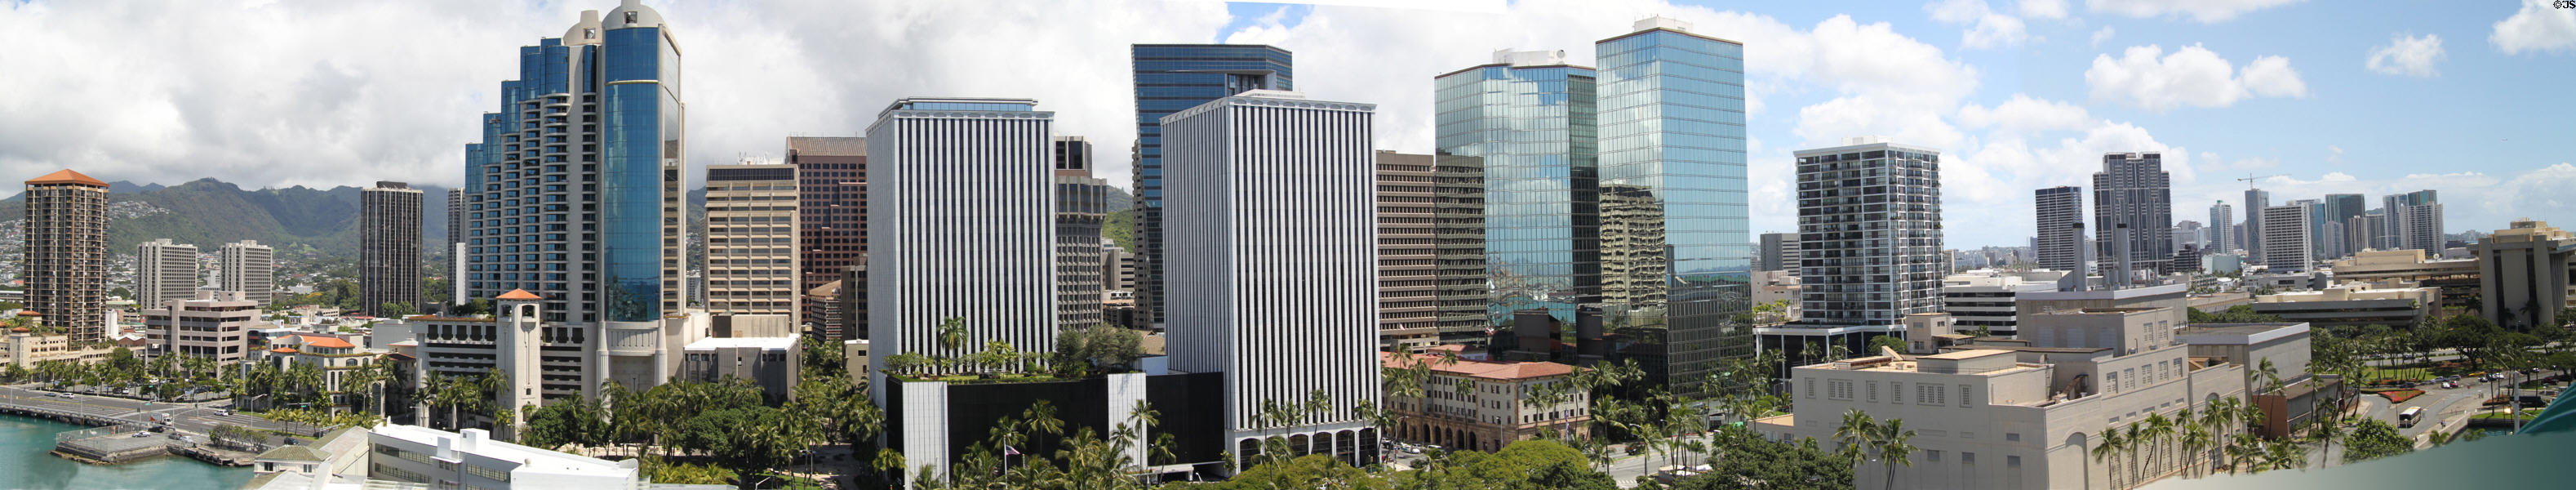 Panorama of downtown Honolulu from Aloha Tower observation deck. Honolulu, HI.